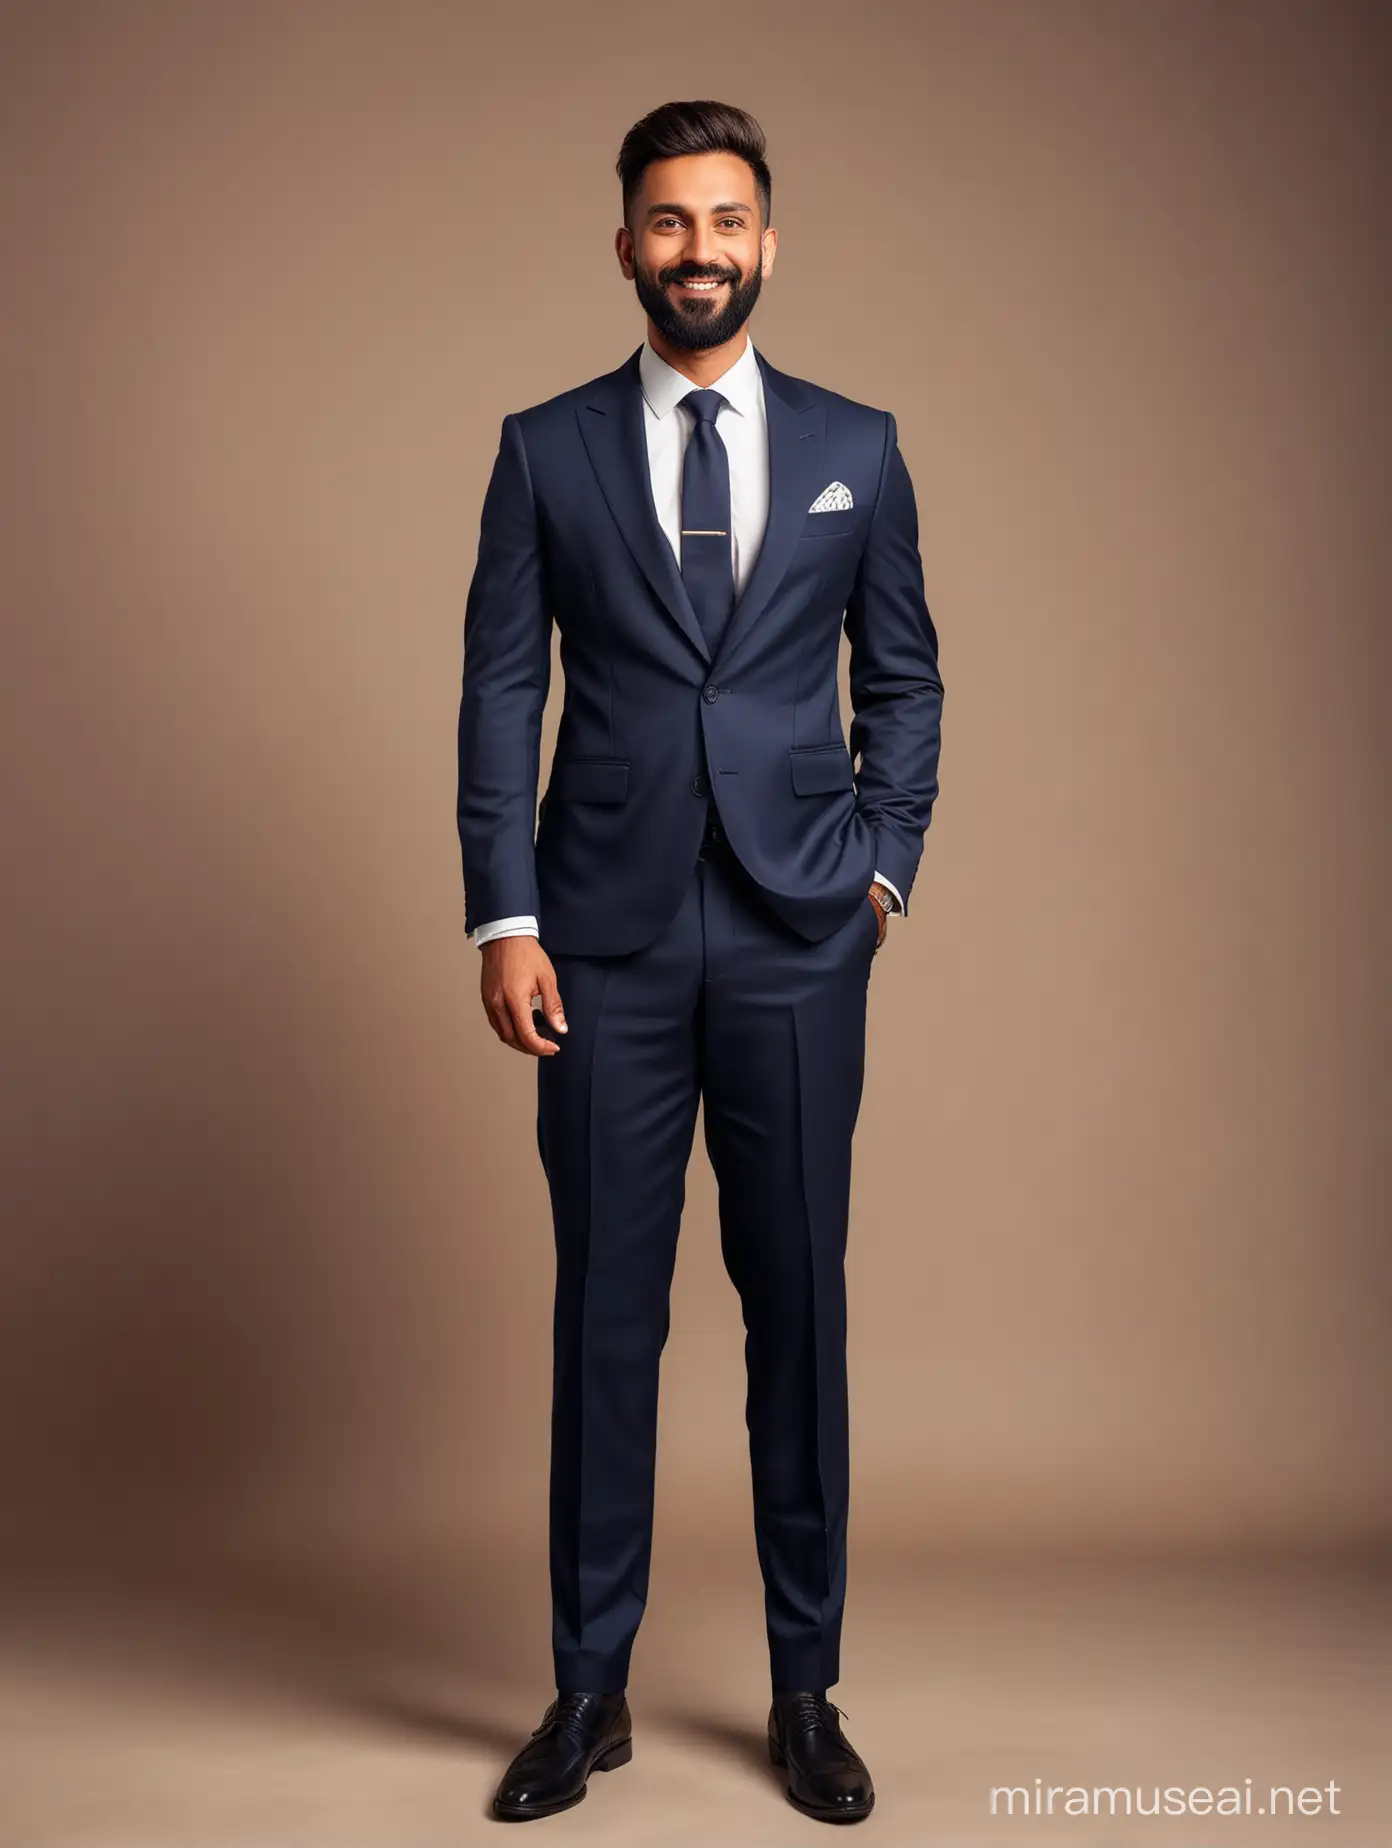 European Man as Indian Gentleman in Elegant Suit with Stylish Beard